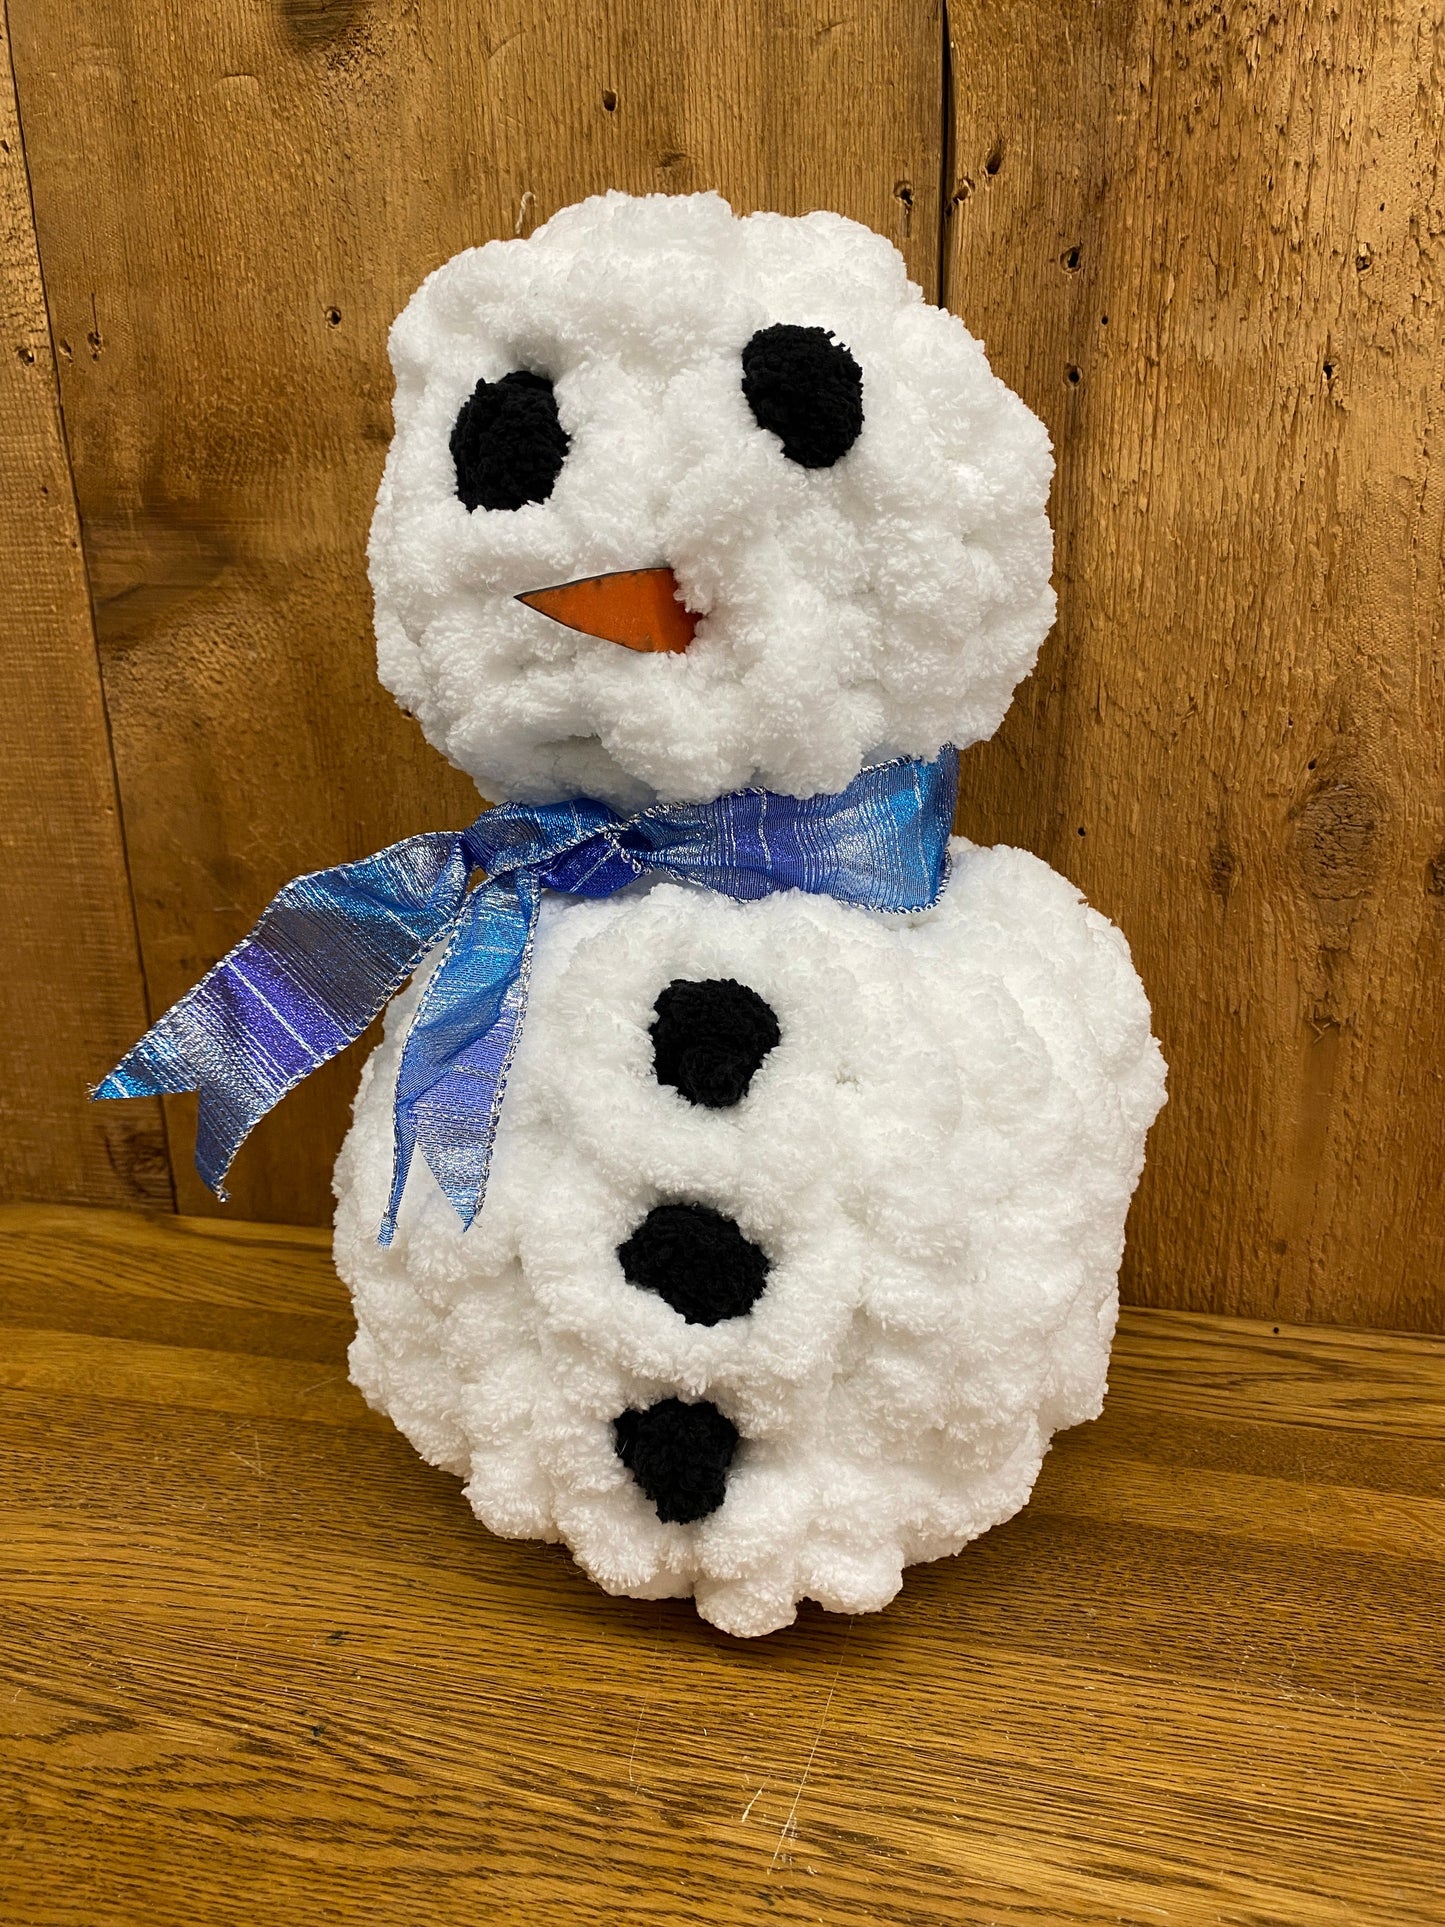 Feb 17th - Chunky Knitted Snowmen Workshop!